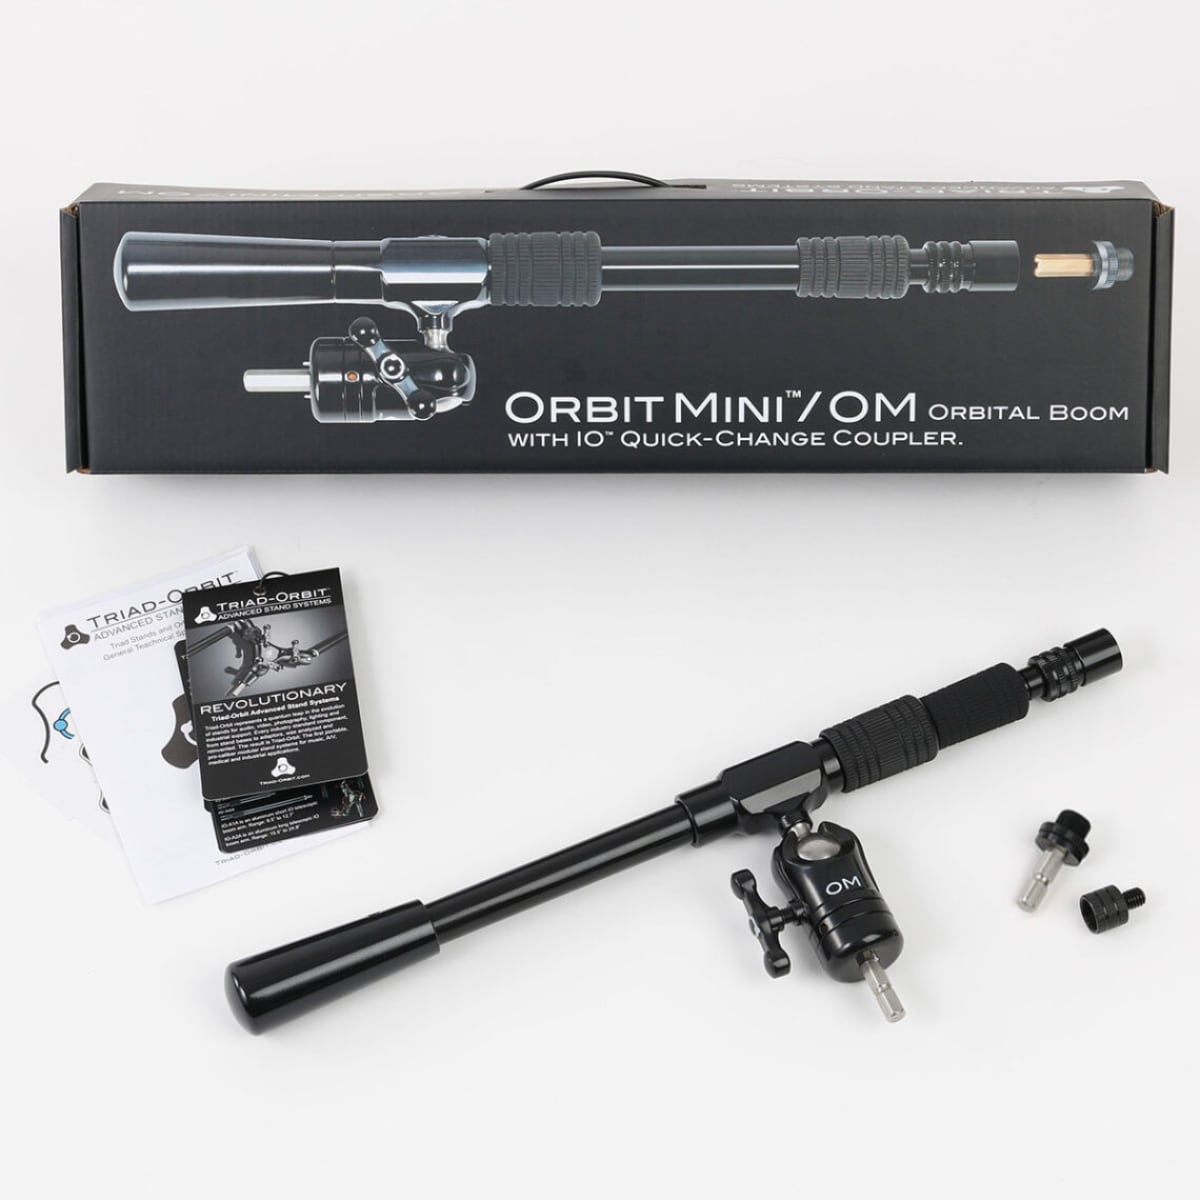 Triad-Orbit ORBIT Mini / OM Single-arm Orbital Boom